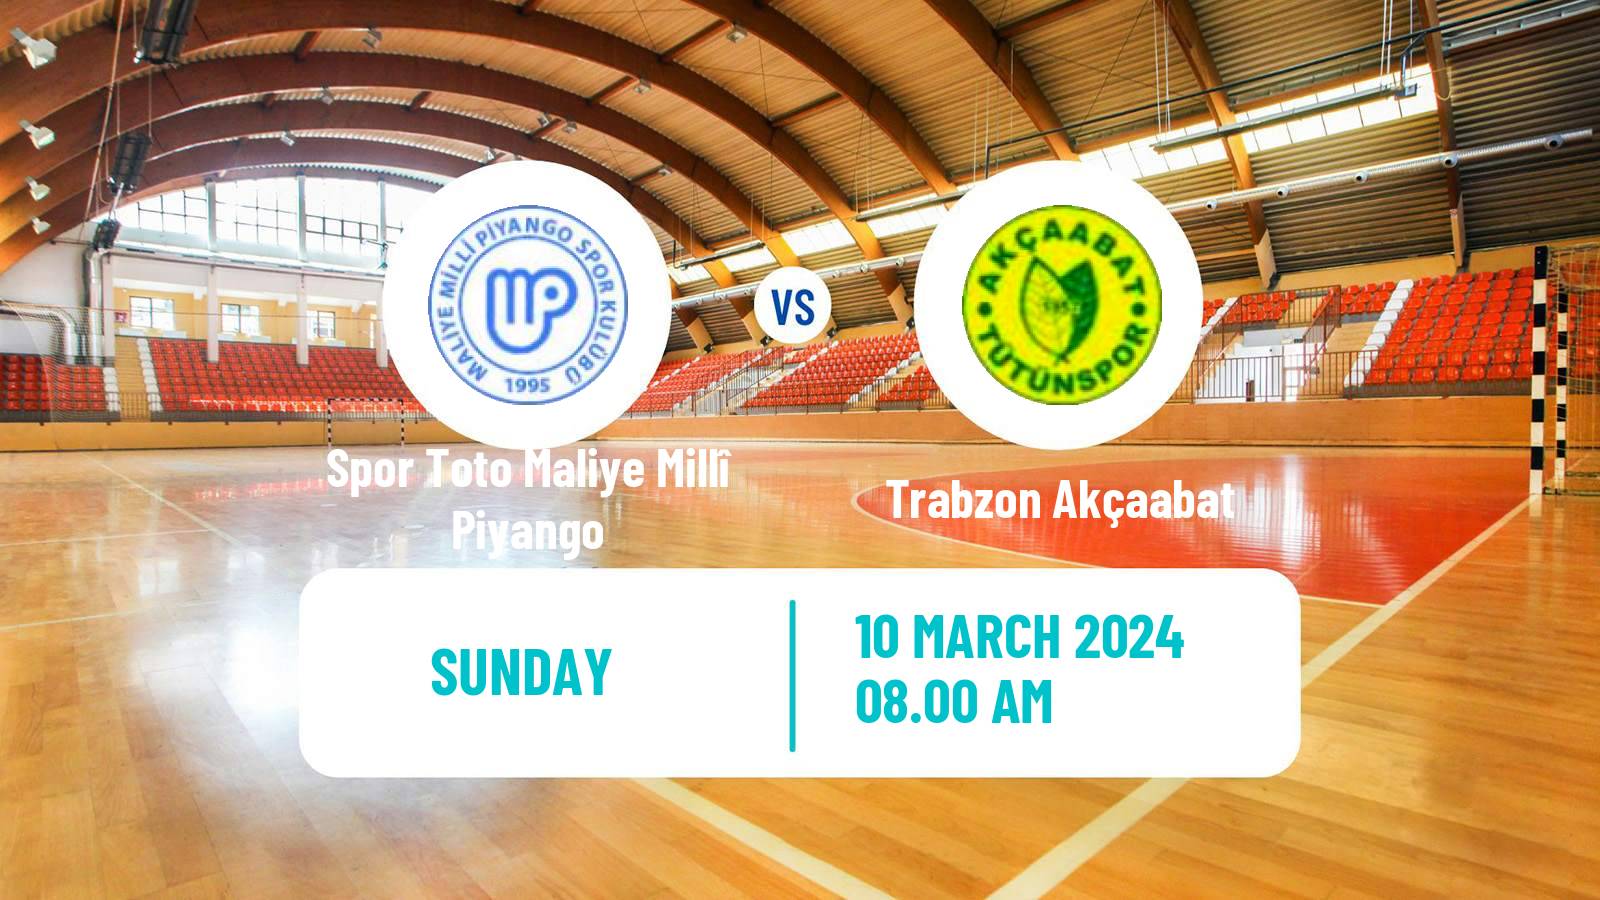 Handball Turkish Superlig Handball Spor Toto Maliye Millî Piyango - Trabzon Akçaabat